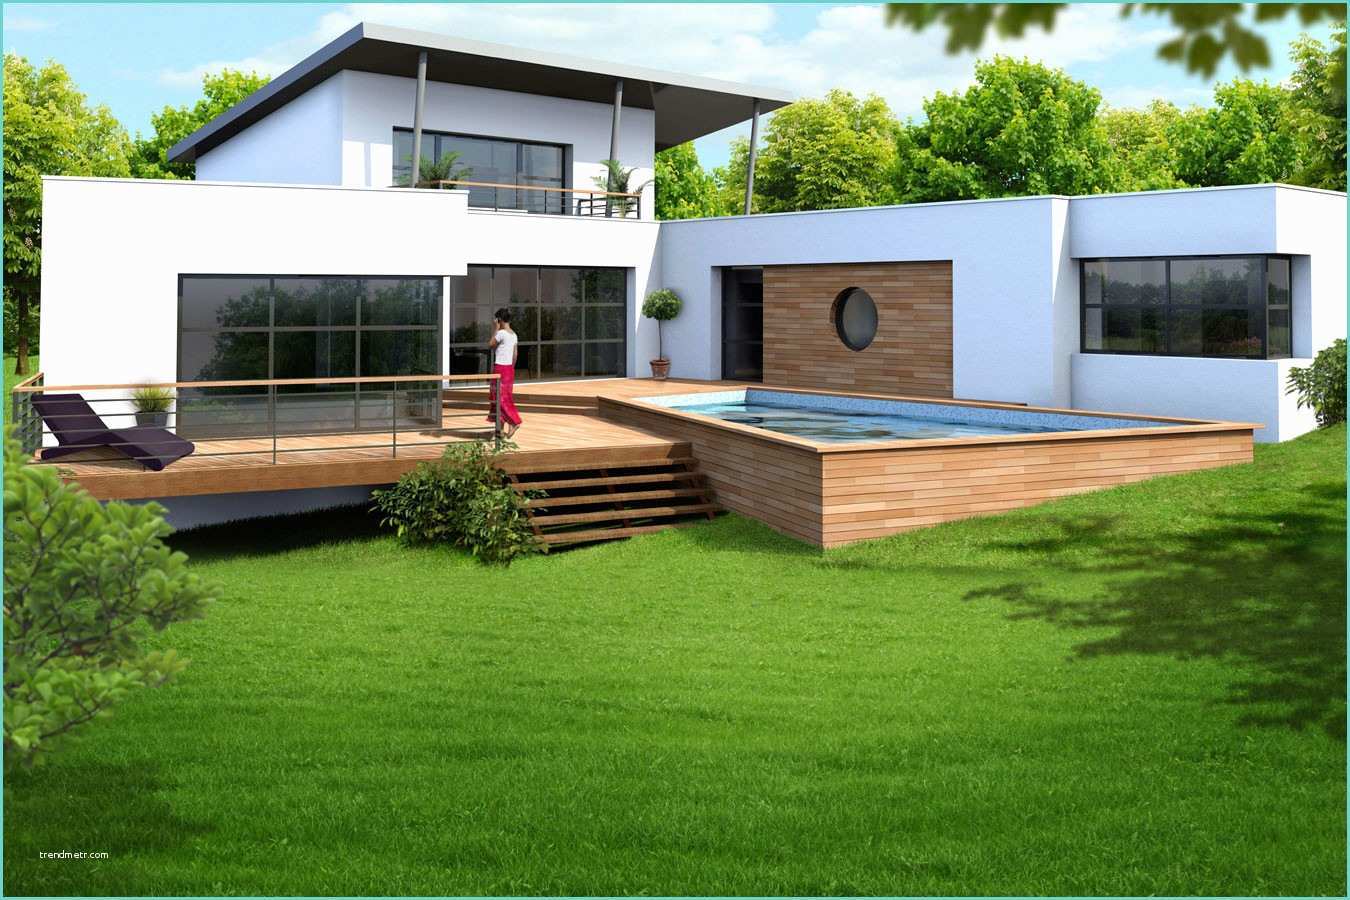 Sims 4 Construction Maison Moderne Idee Construction Maison Sims 4 Avec Maison Sims 3 Plan